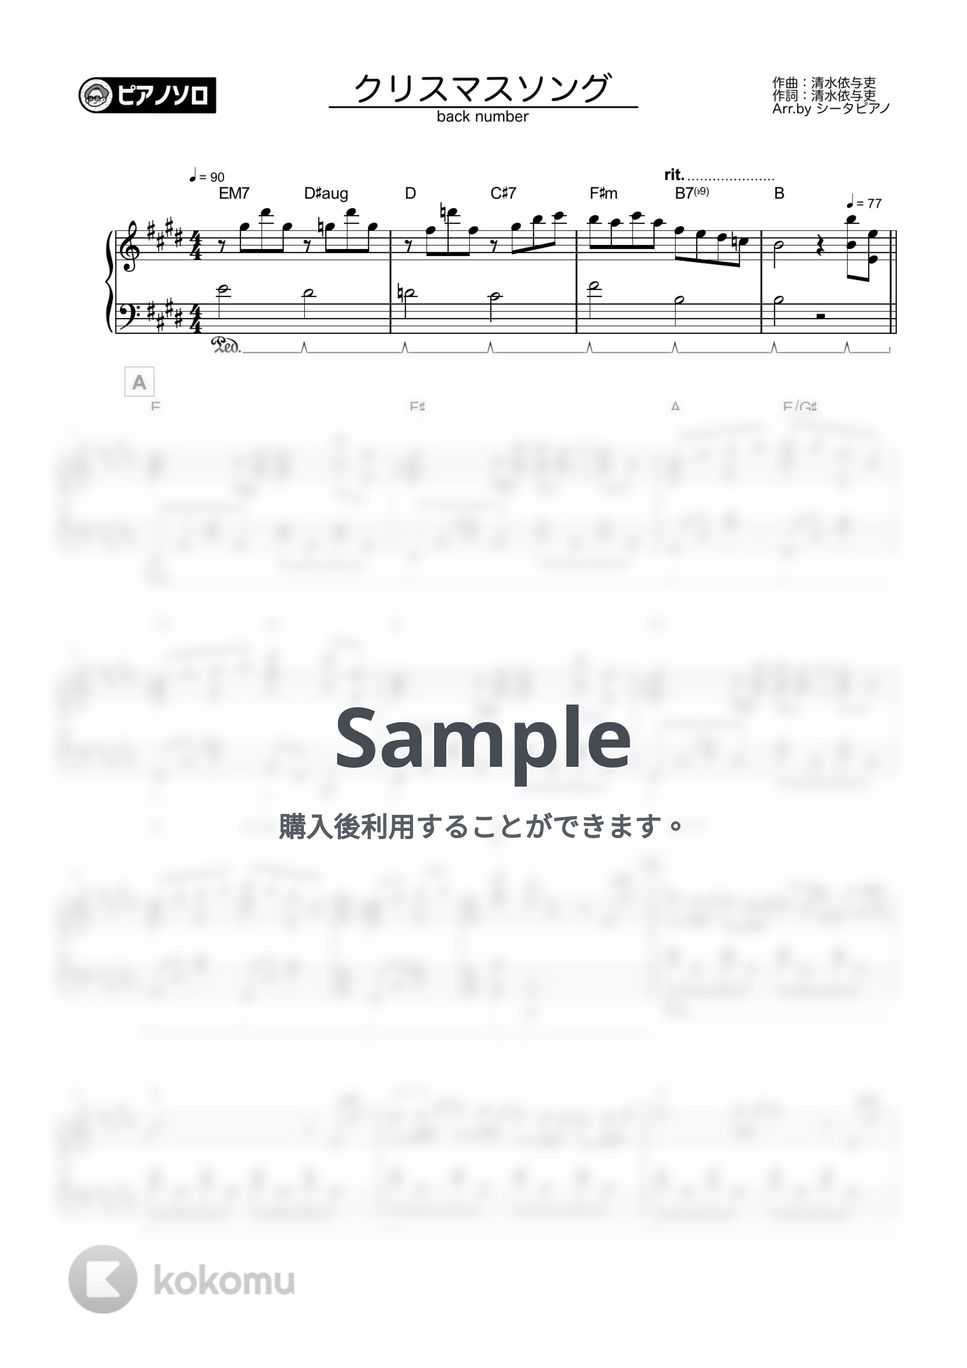 backnumber - クリスマスソング by シータピアノ